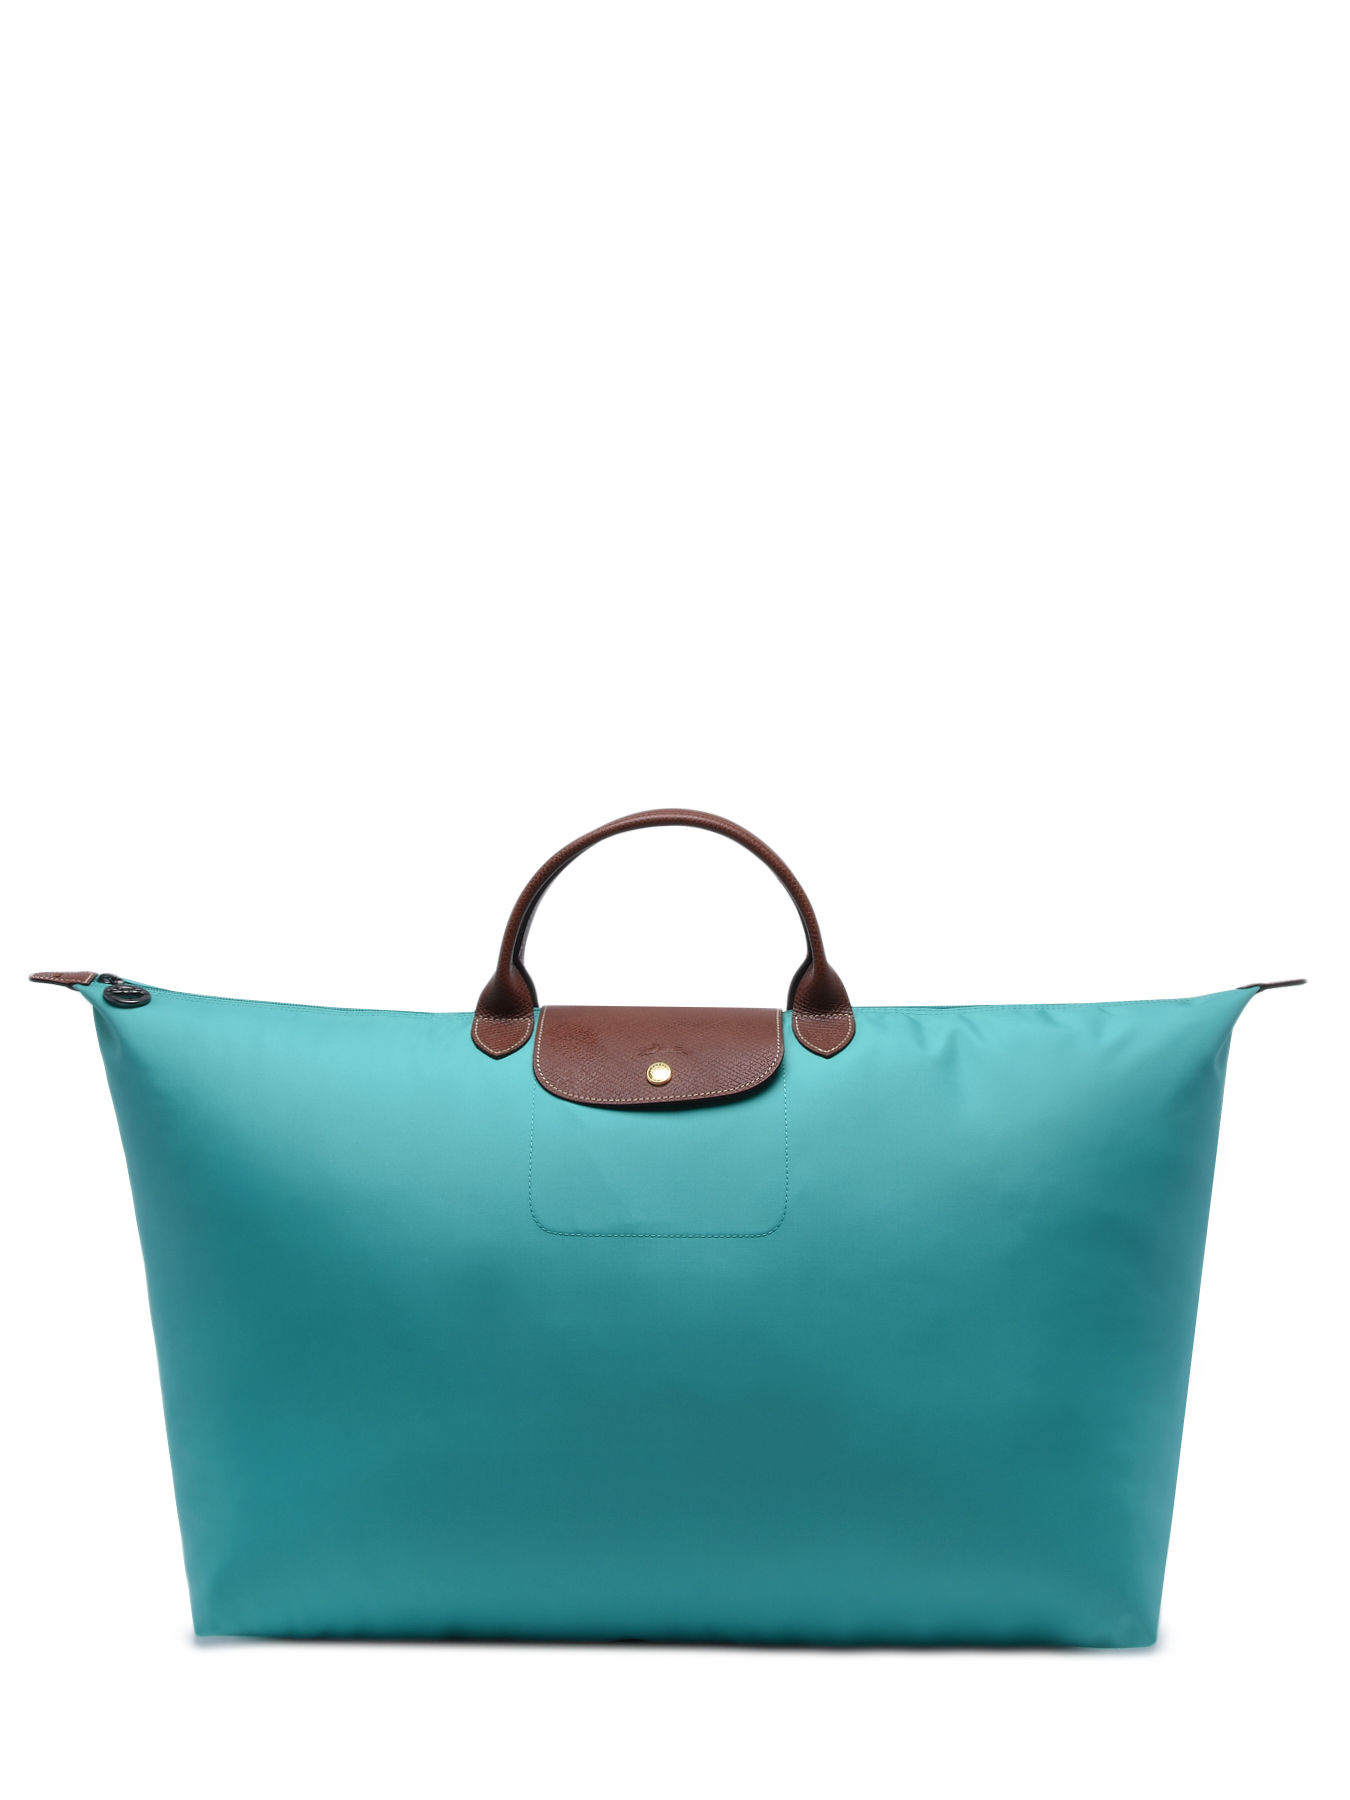 Longchamp Travel bag L1625089 on edisac.com